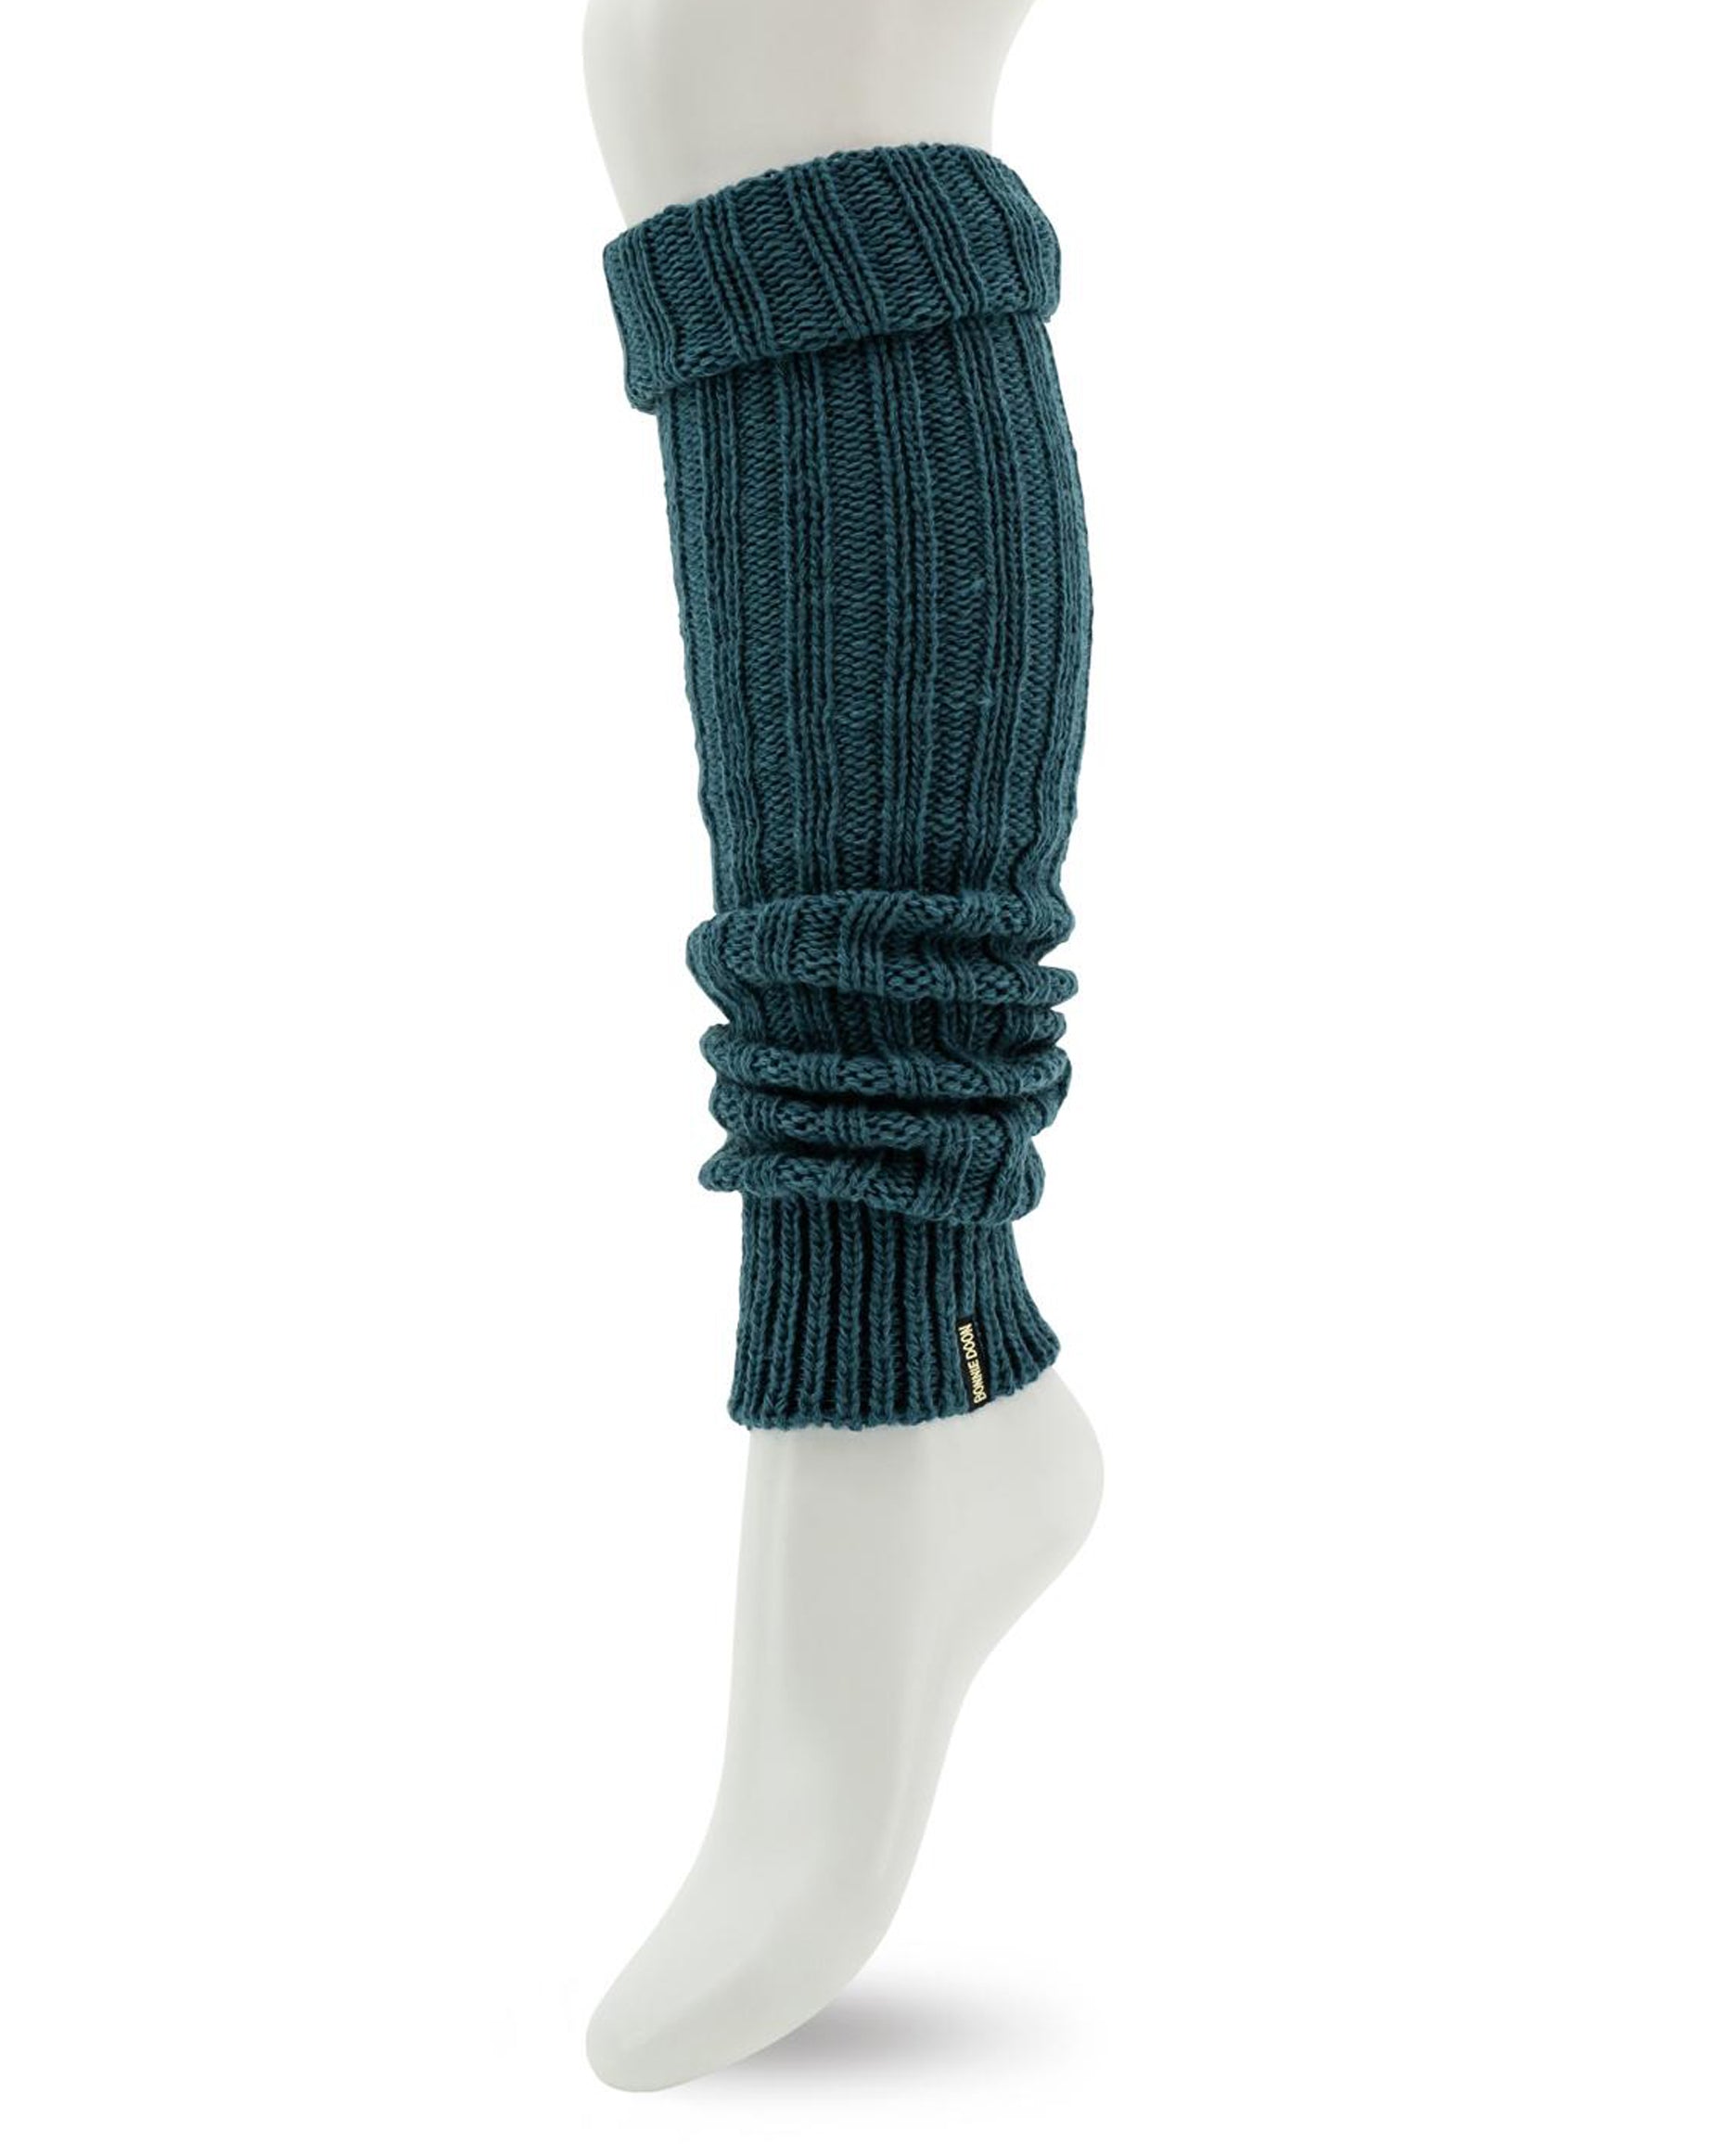 chunking rib knit leg warmers in a teal blue colour